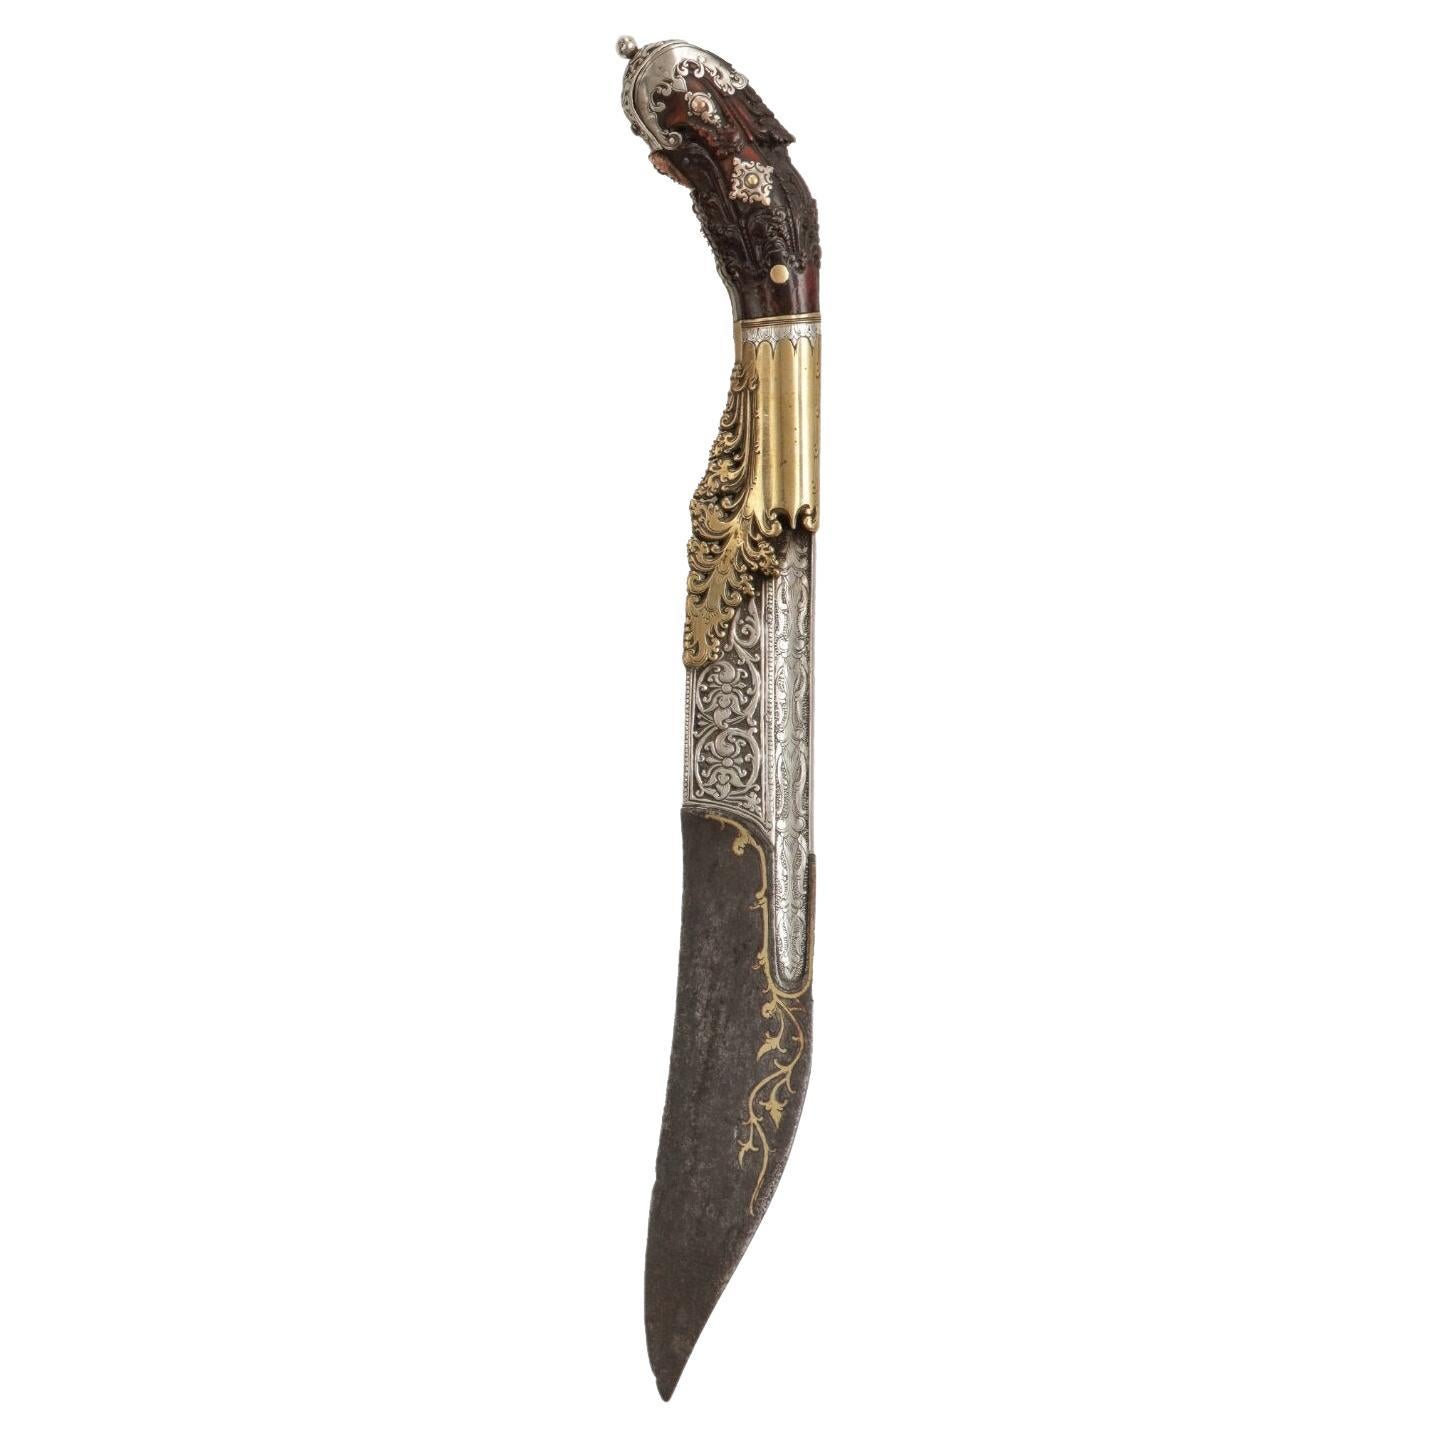 A Sinhalese silver and gold Sinhalese piha-kaetta dagger, 18th century